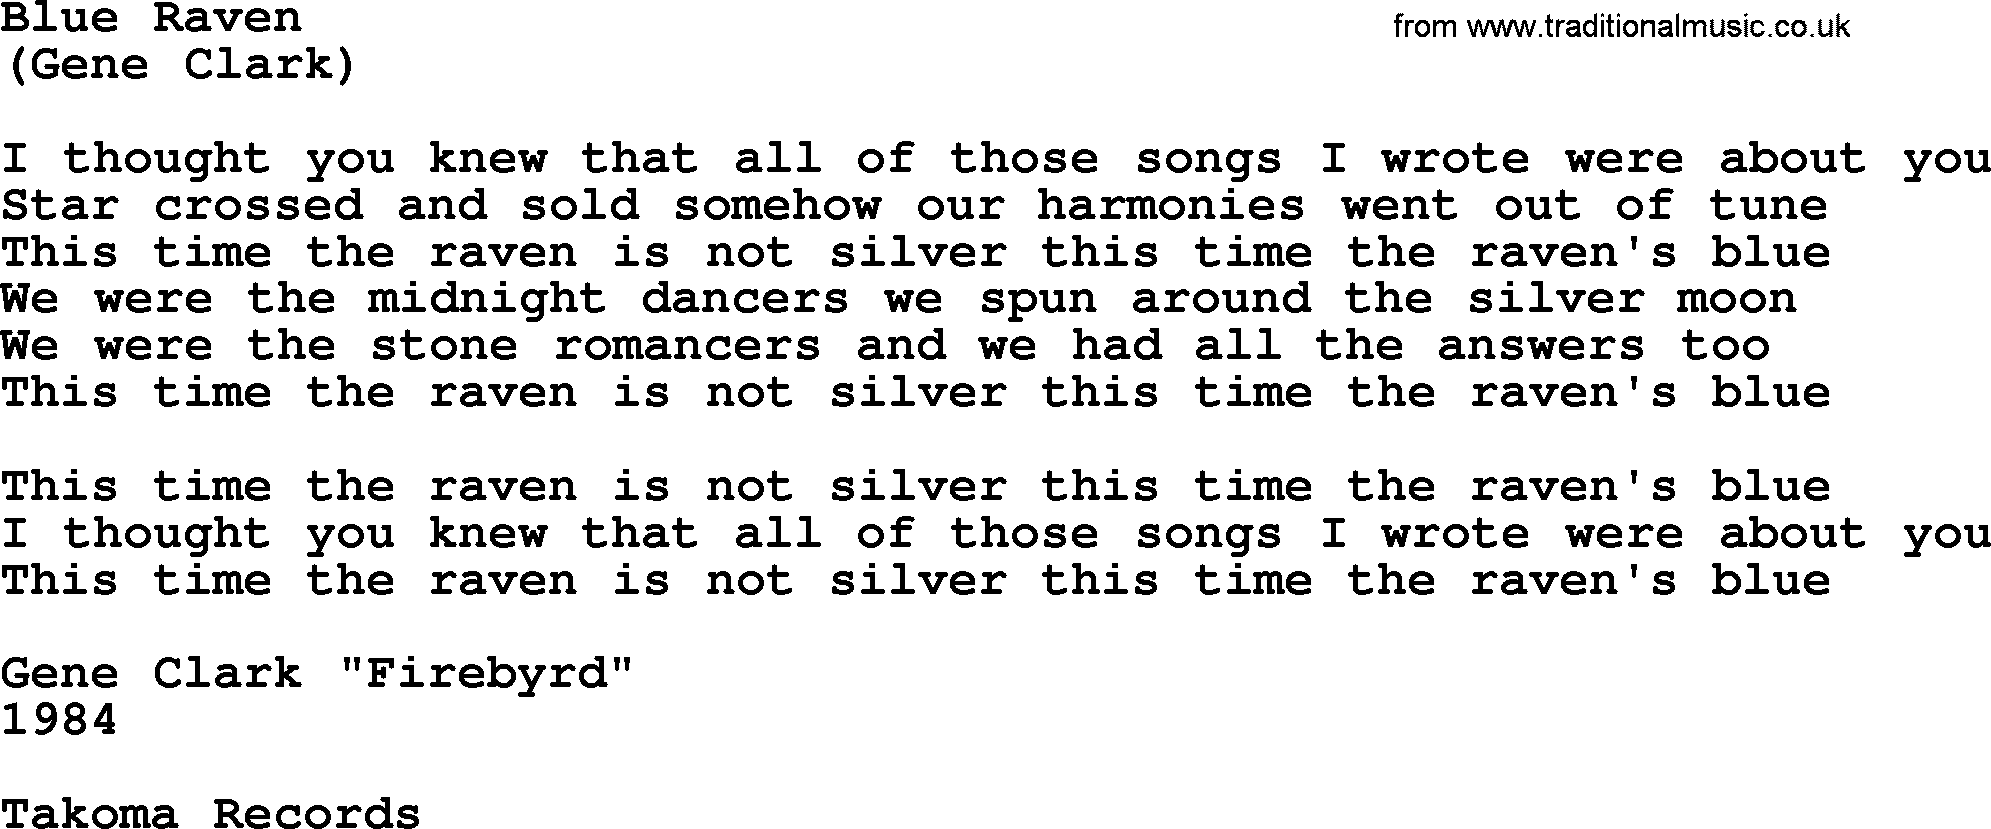 The Byrds song Blue Raven, lyrics